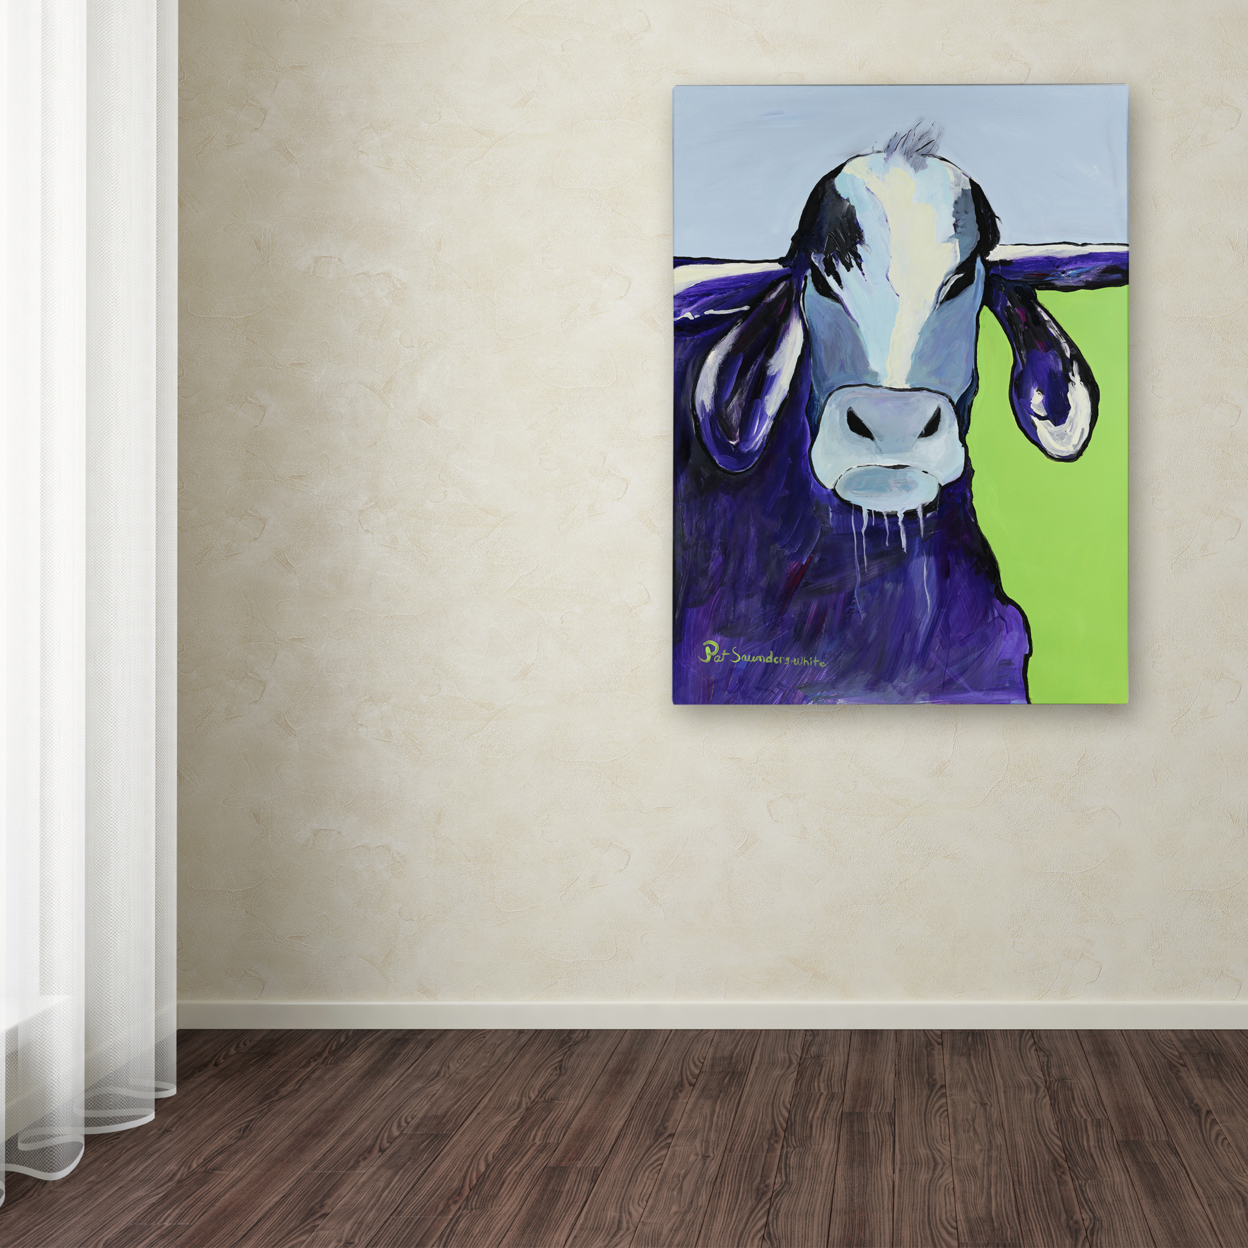 Pat Saunders-White 'Bull Drool' Canvas Art 18 X 24